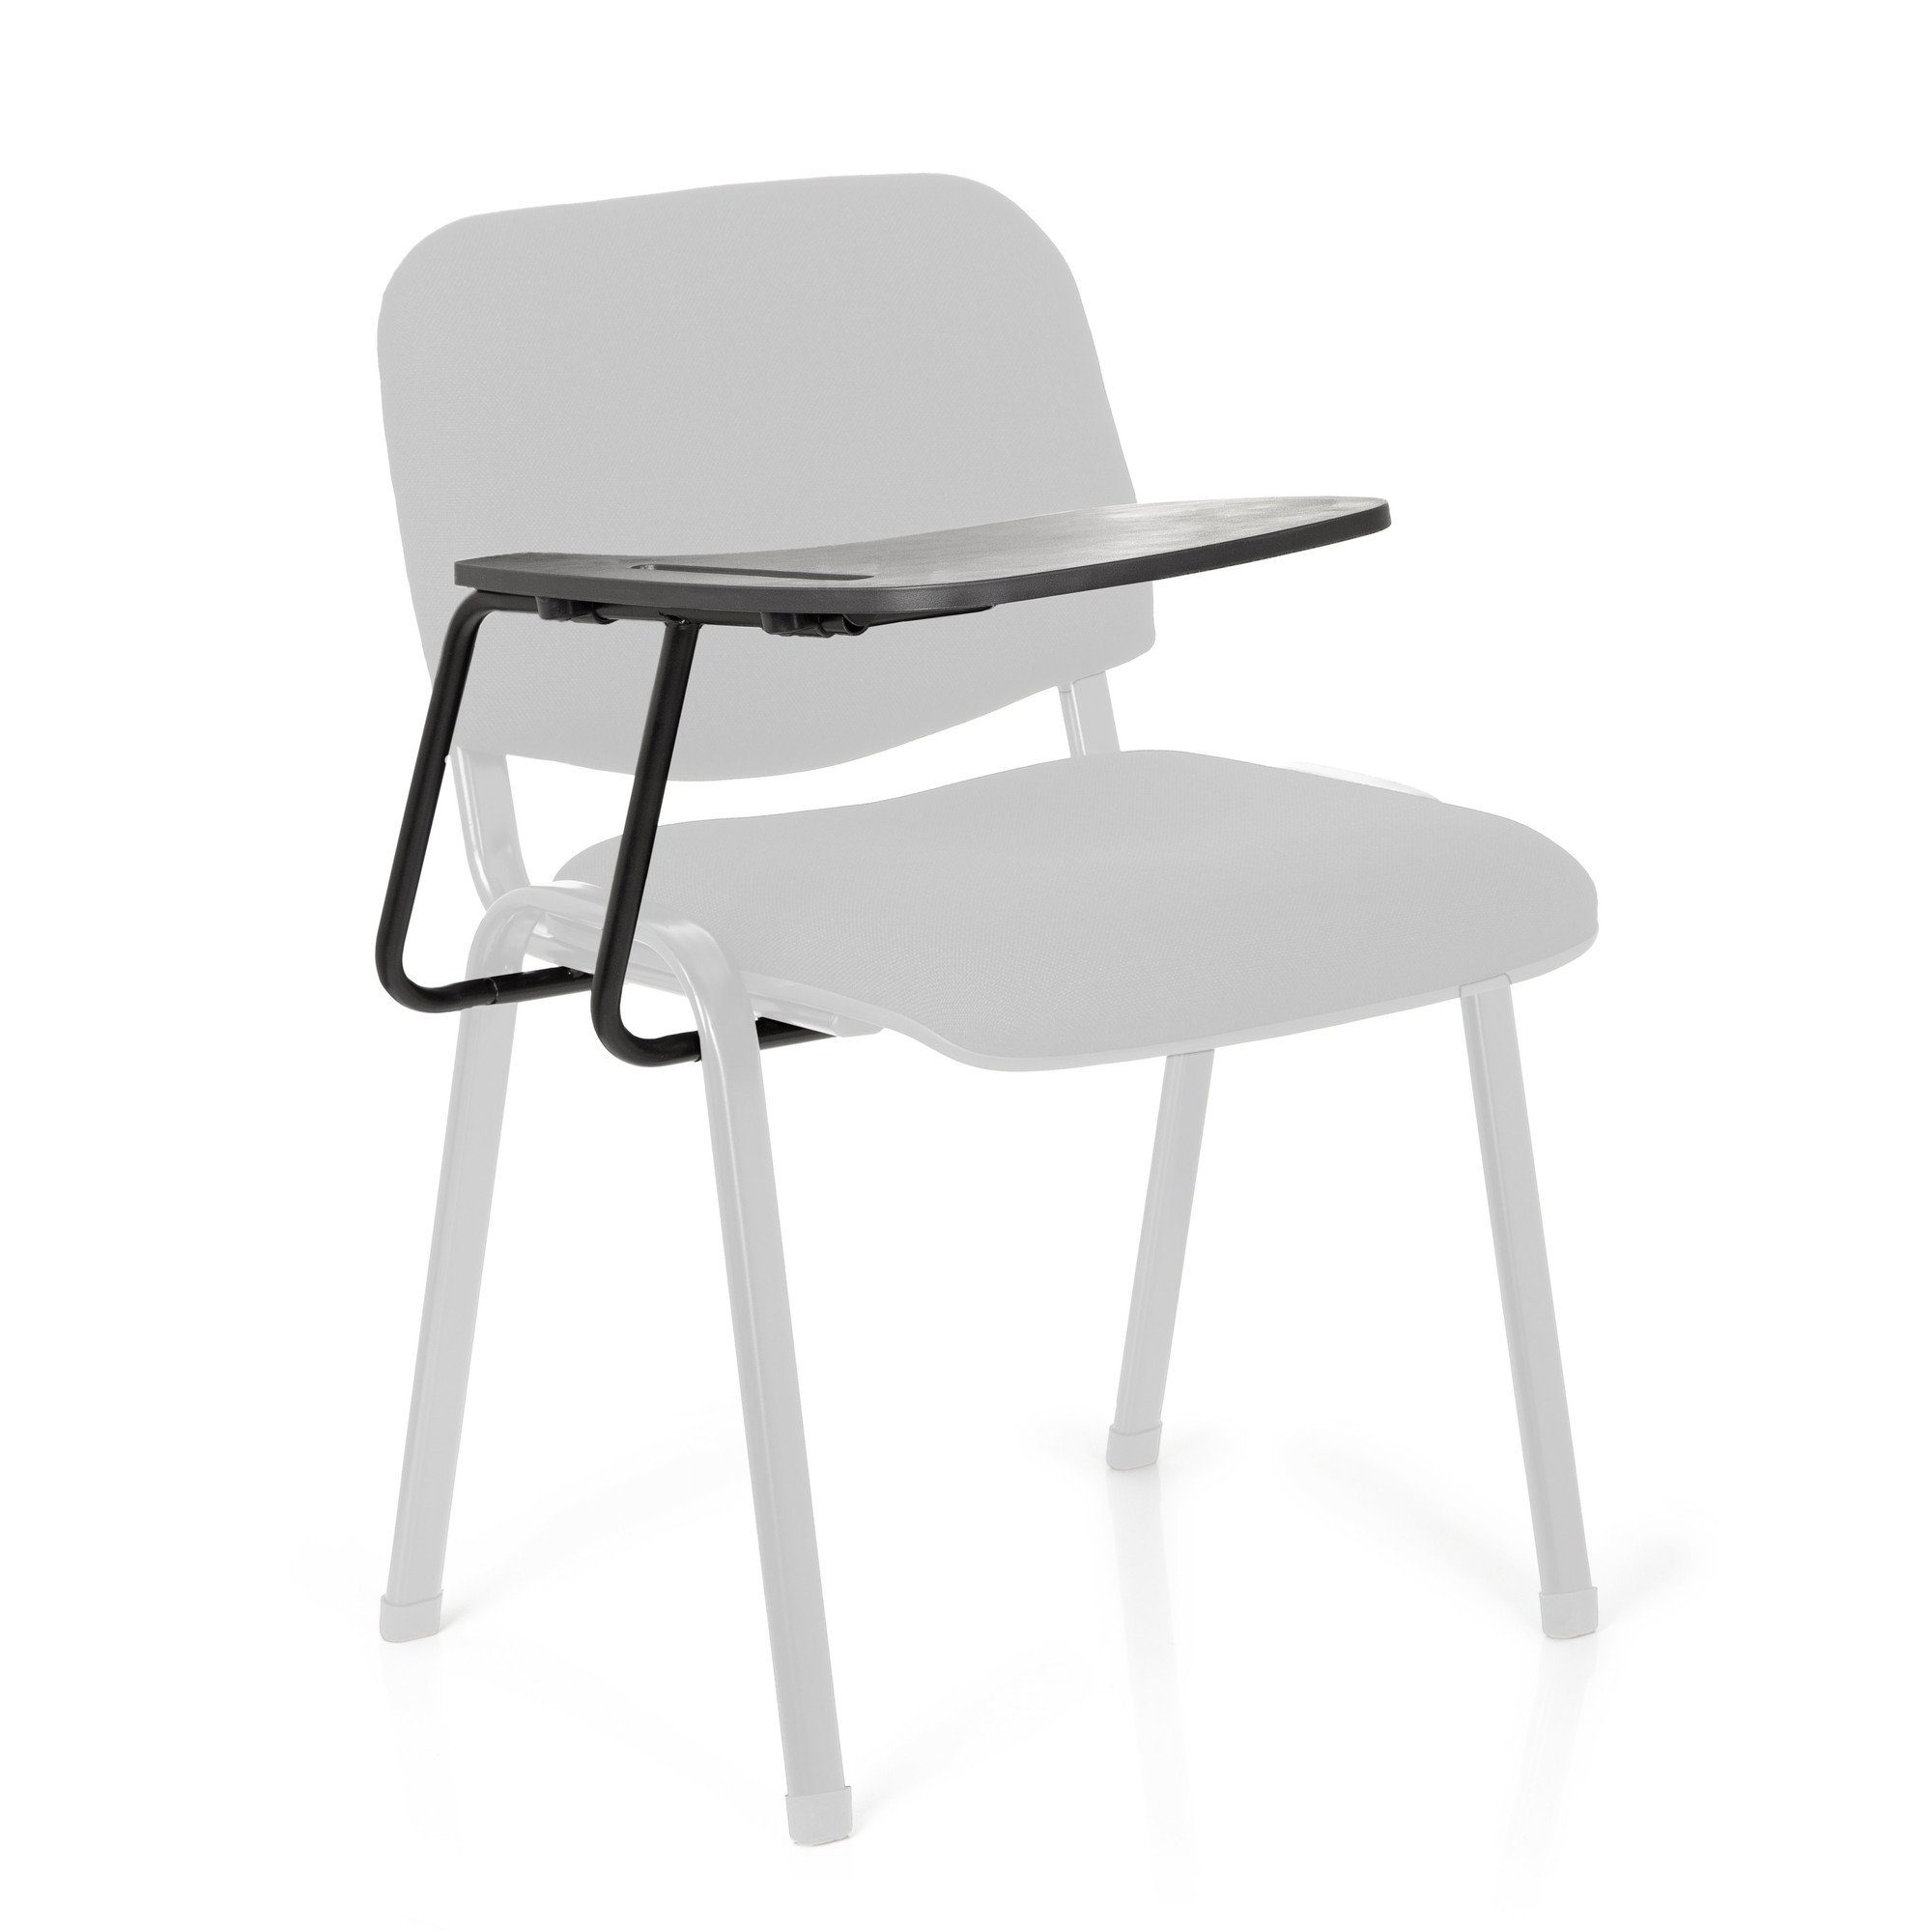 Metall, Besucherstuhl hjh OFFICE Stuhl 4-Fußstuhl Kunststoff, Vierfußstuhl 600 TABLET XT